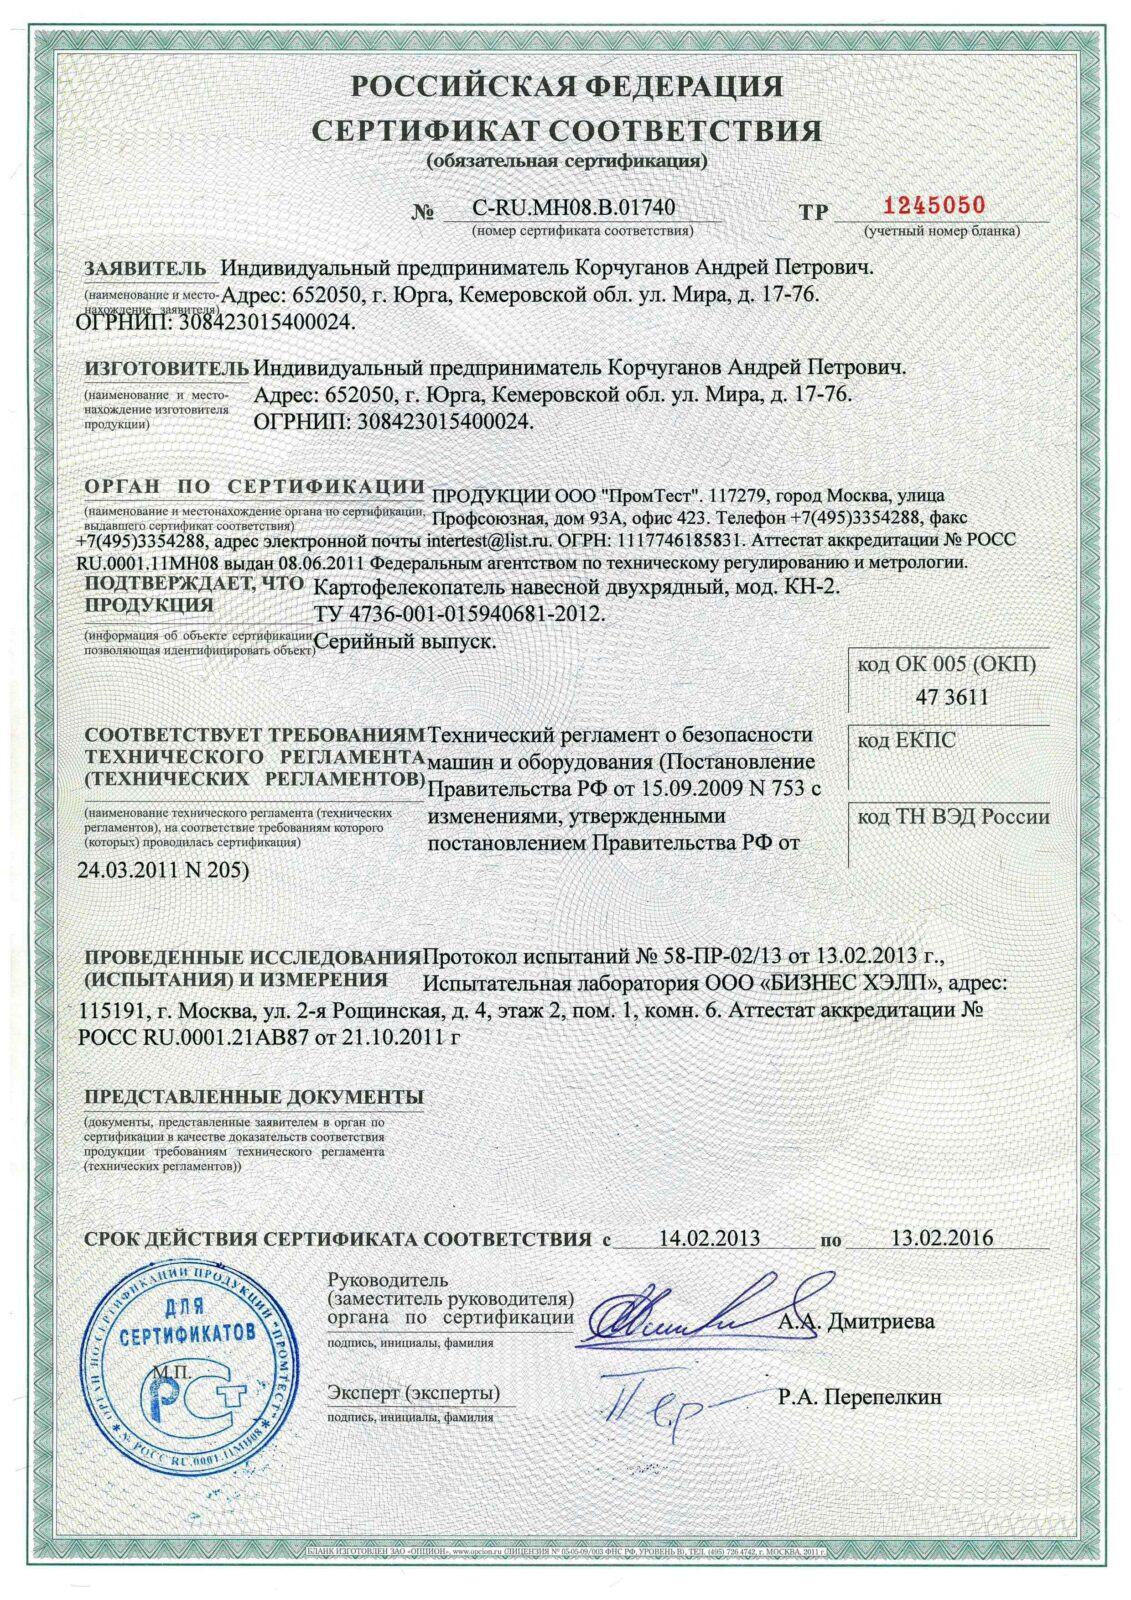 Сертификат картофелекопатель КН 2